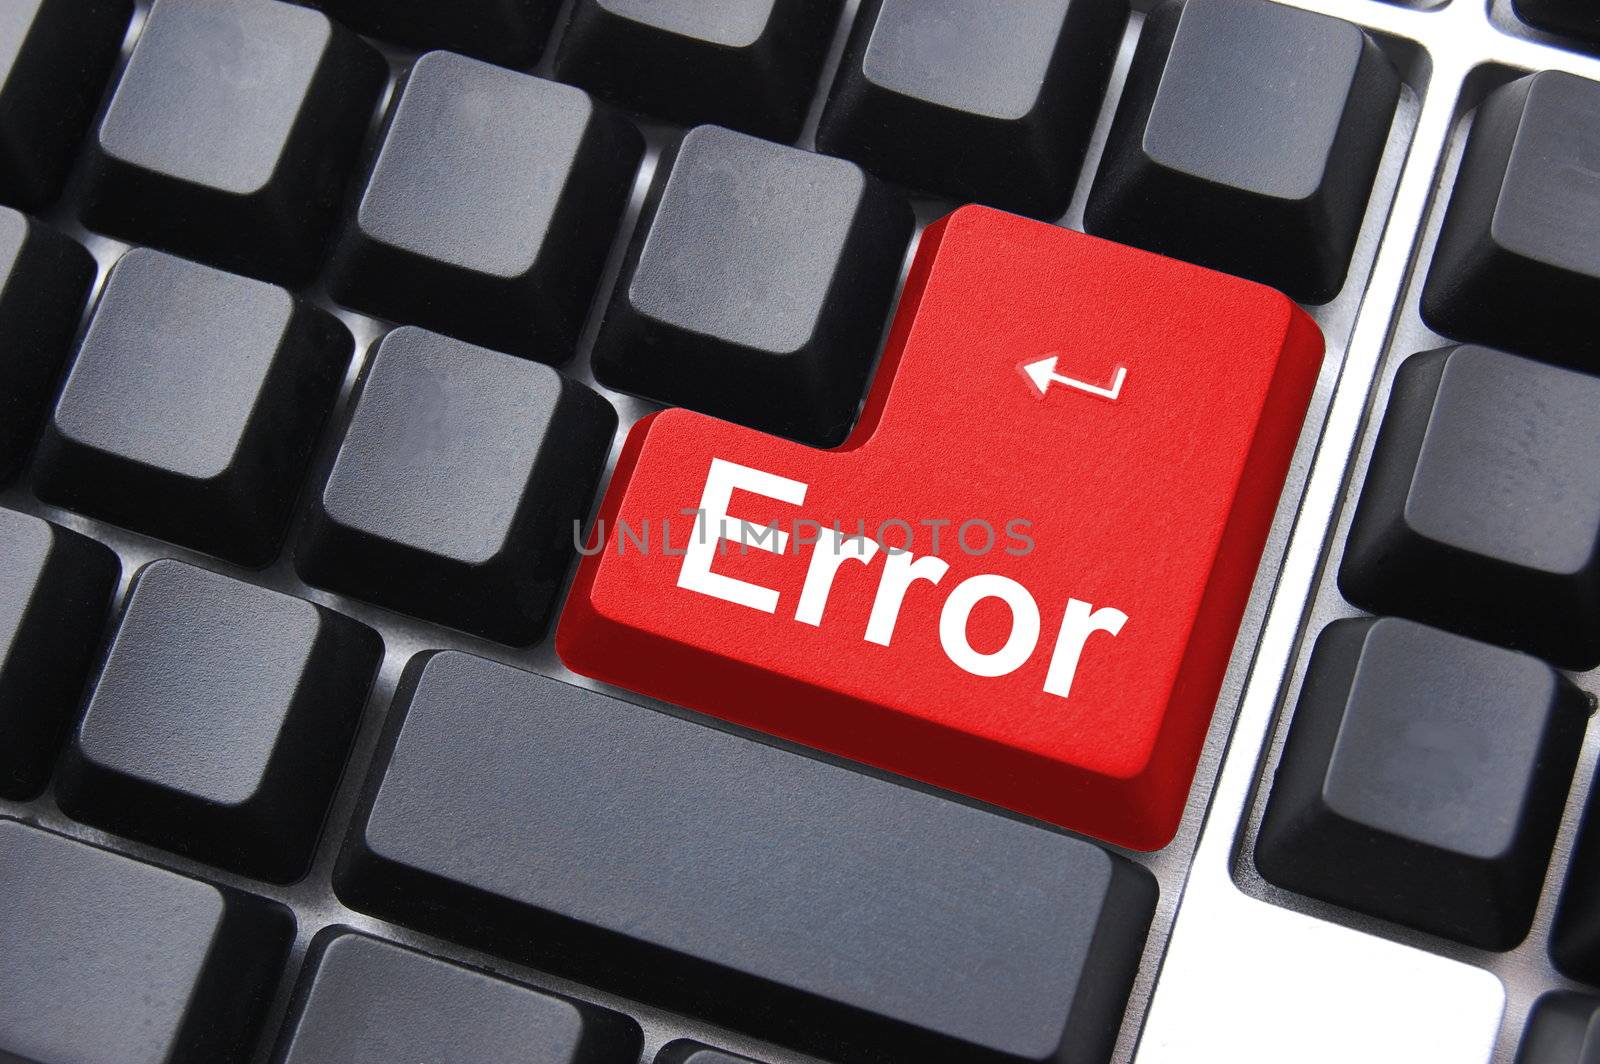 error button on computer keyboard showing internet concept